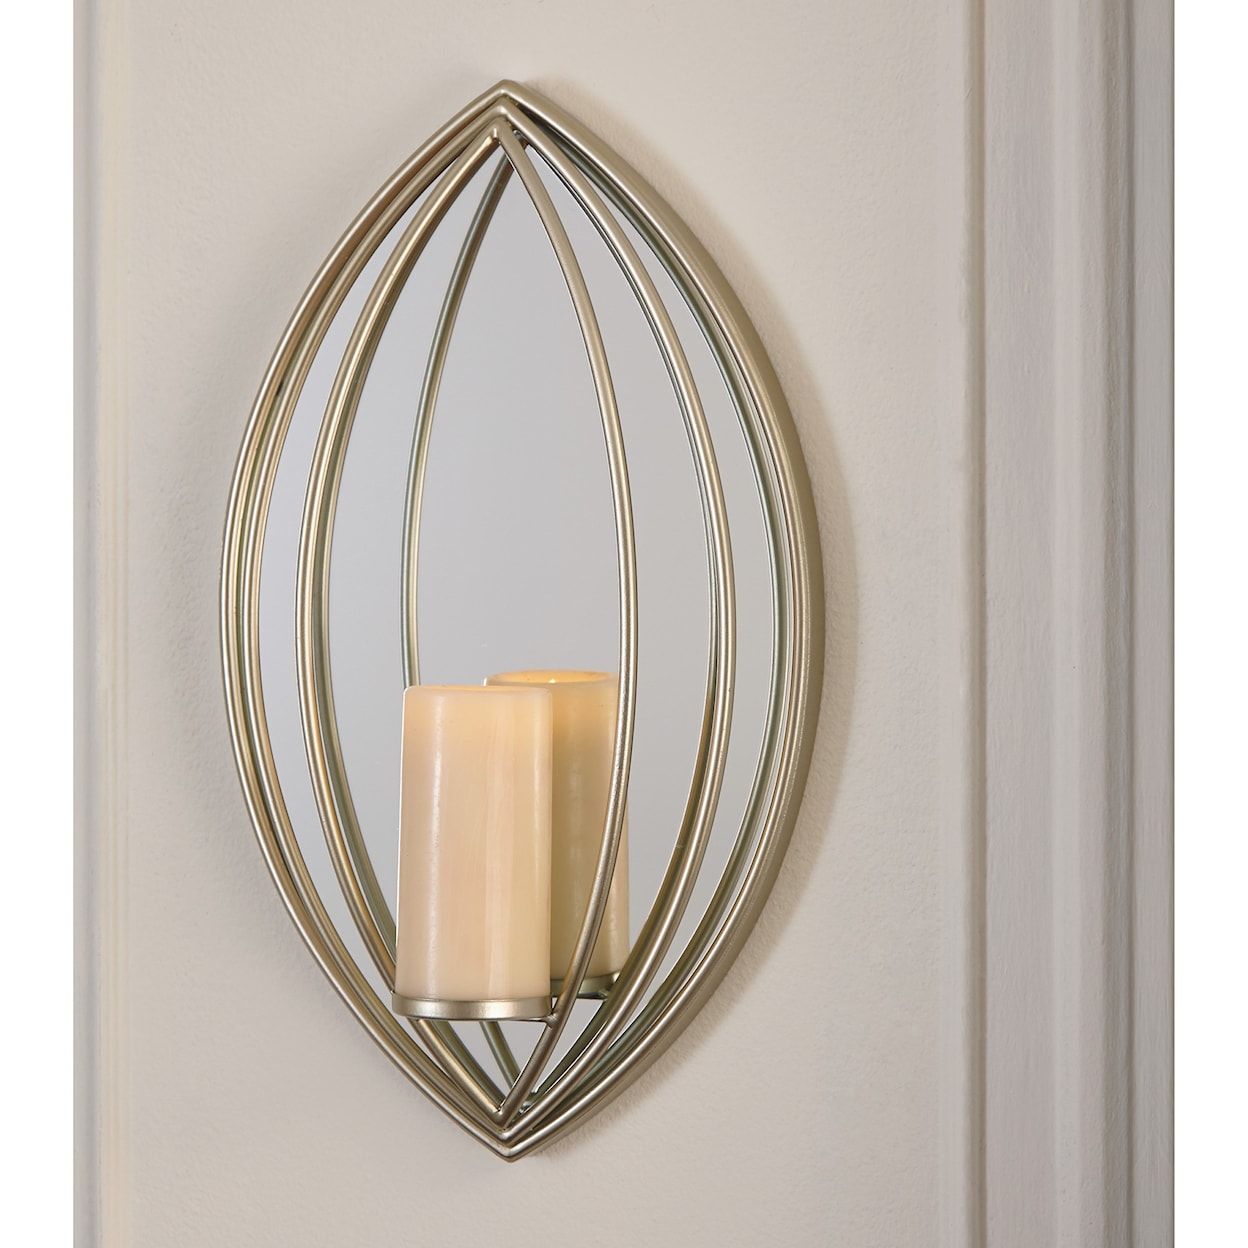 Ashley Furniture Signature Design Accent Mirrors Donnica Silver Finish Wall Sconce